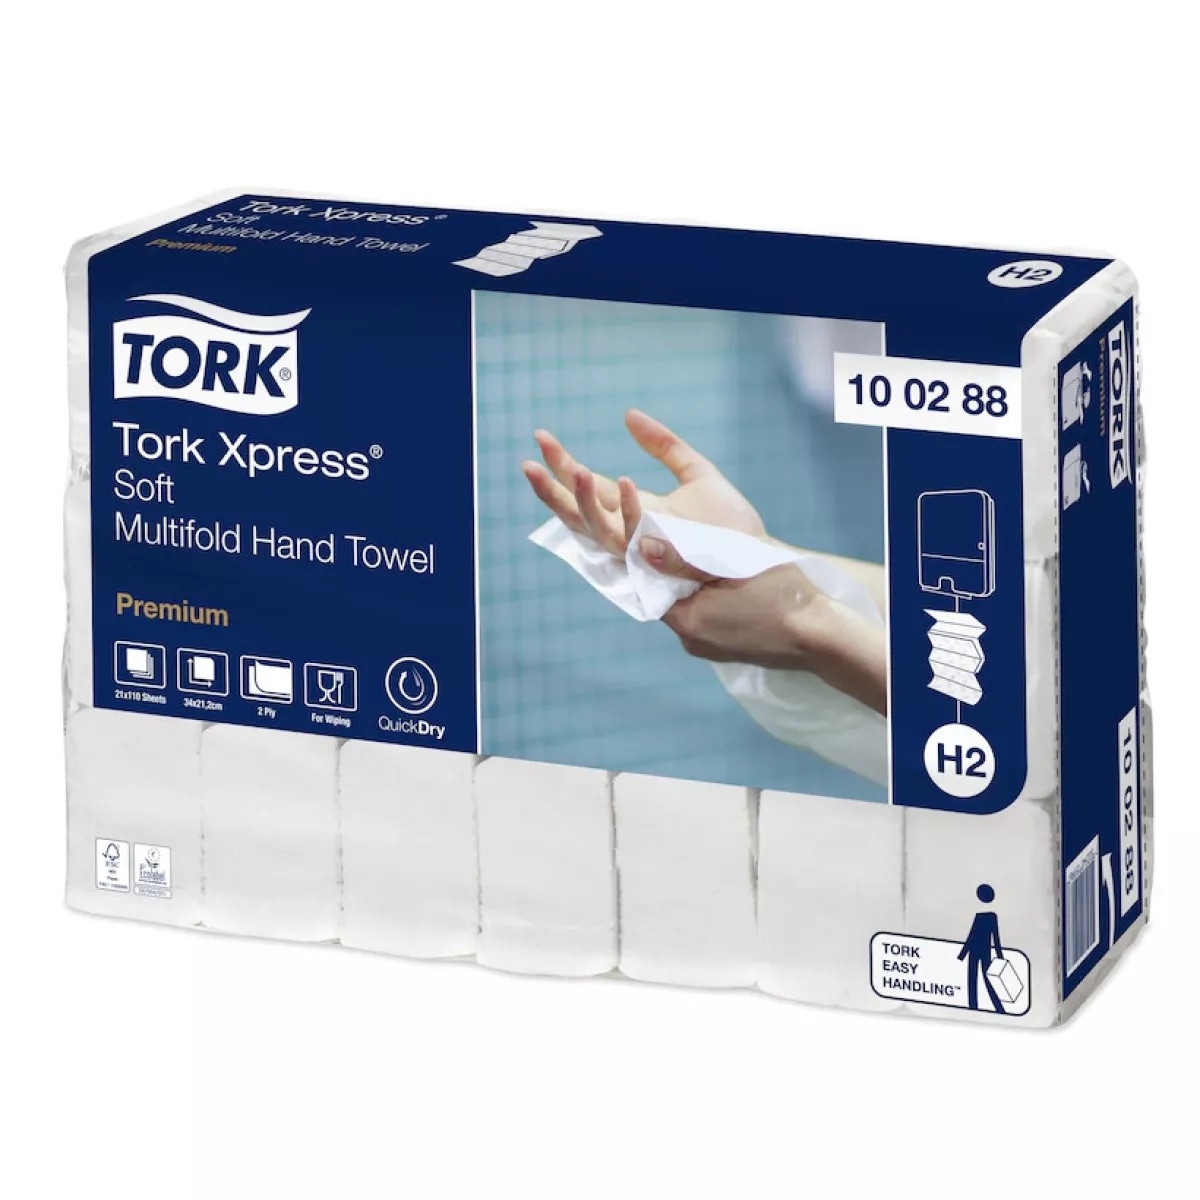 #2 - Tork Xpress Soft Multifold Hand Towel H2, håndklædeark, 2310 ark